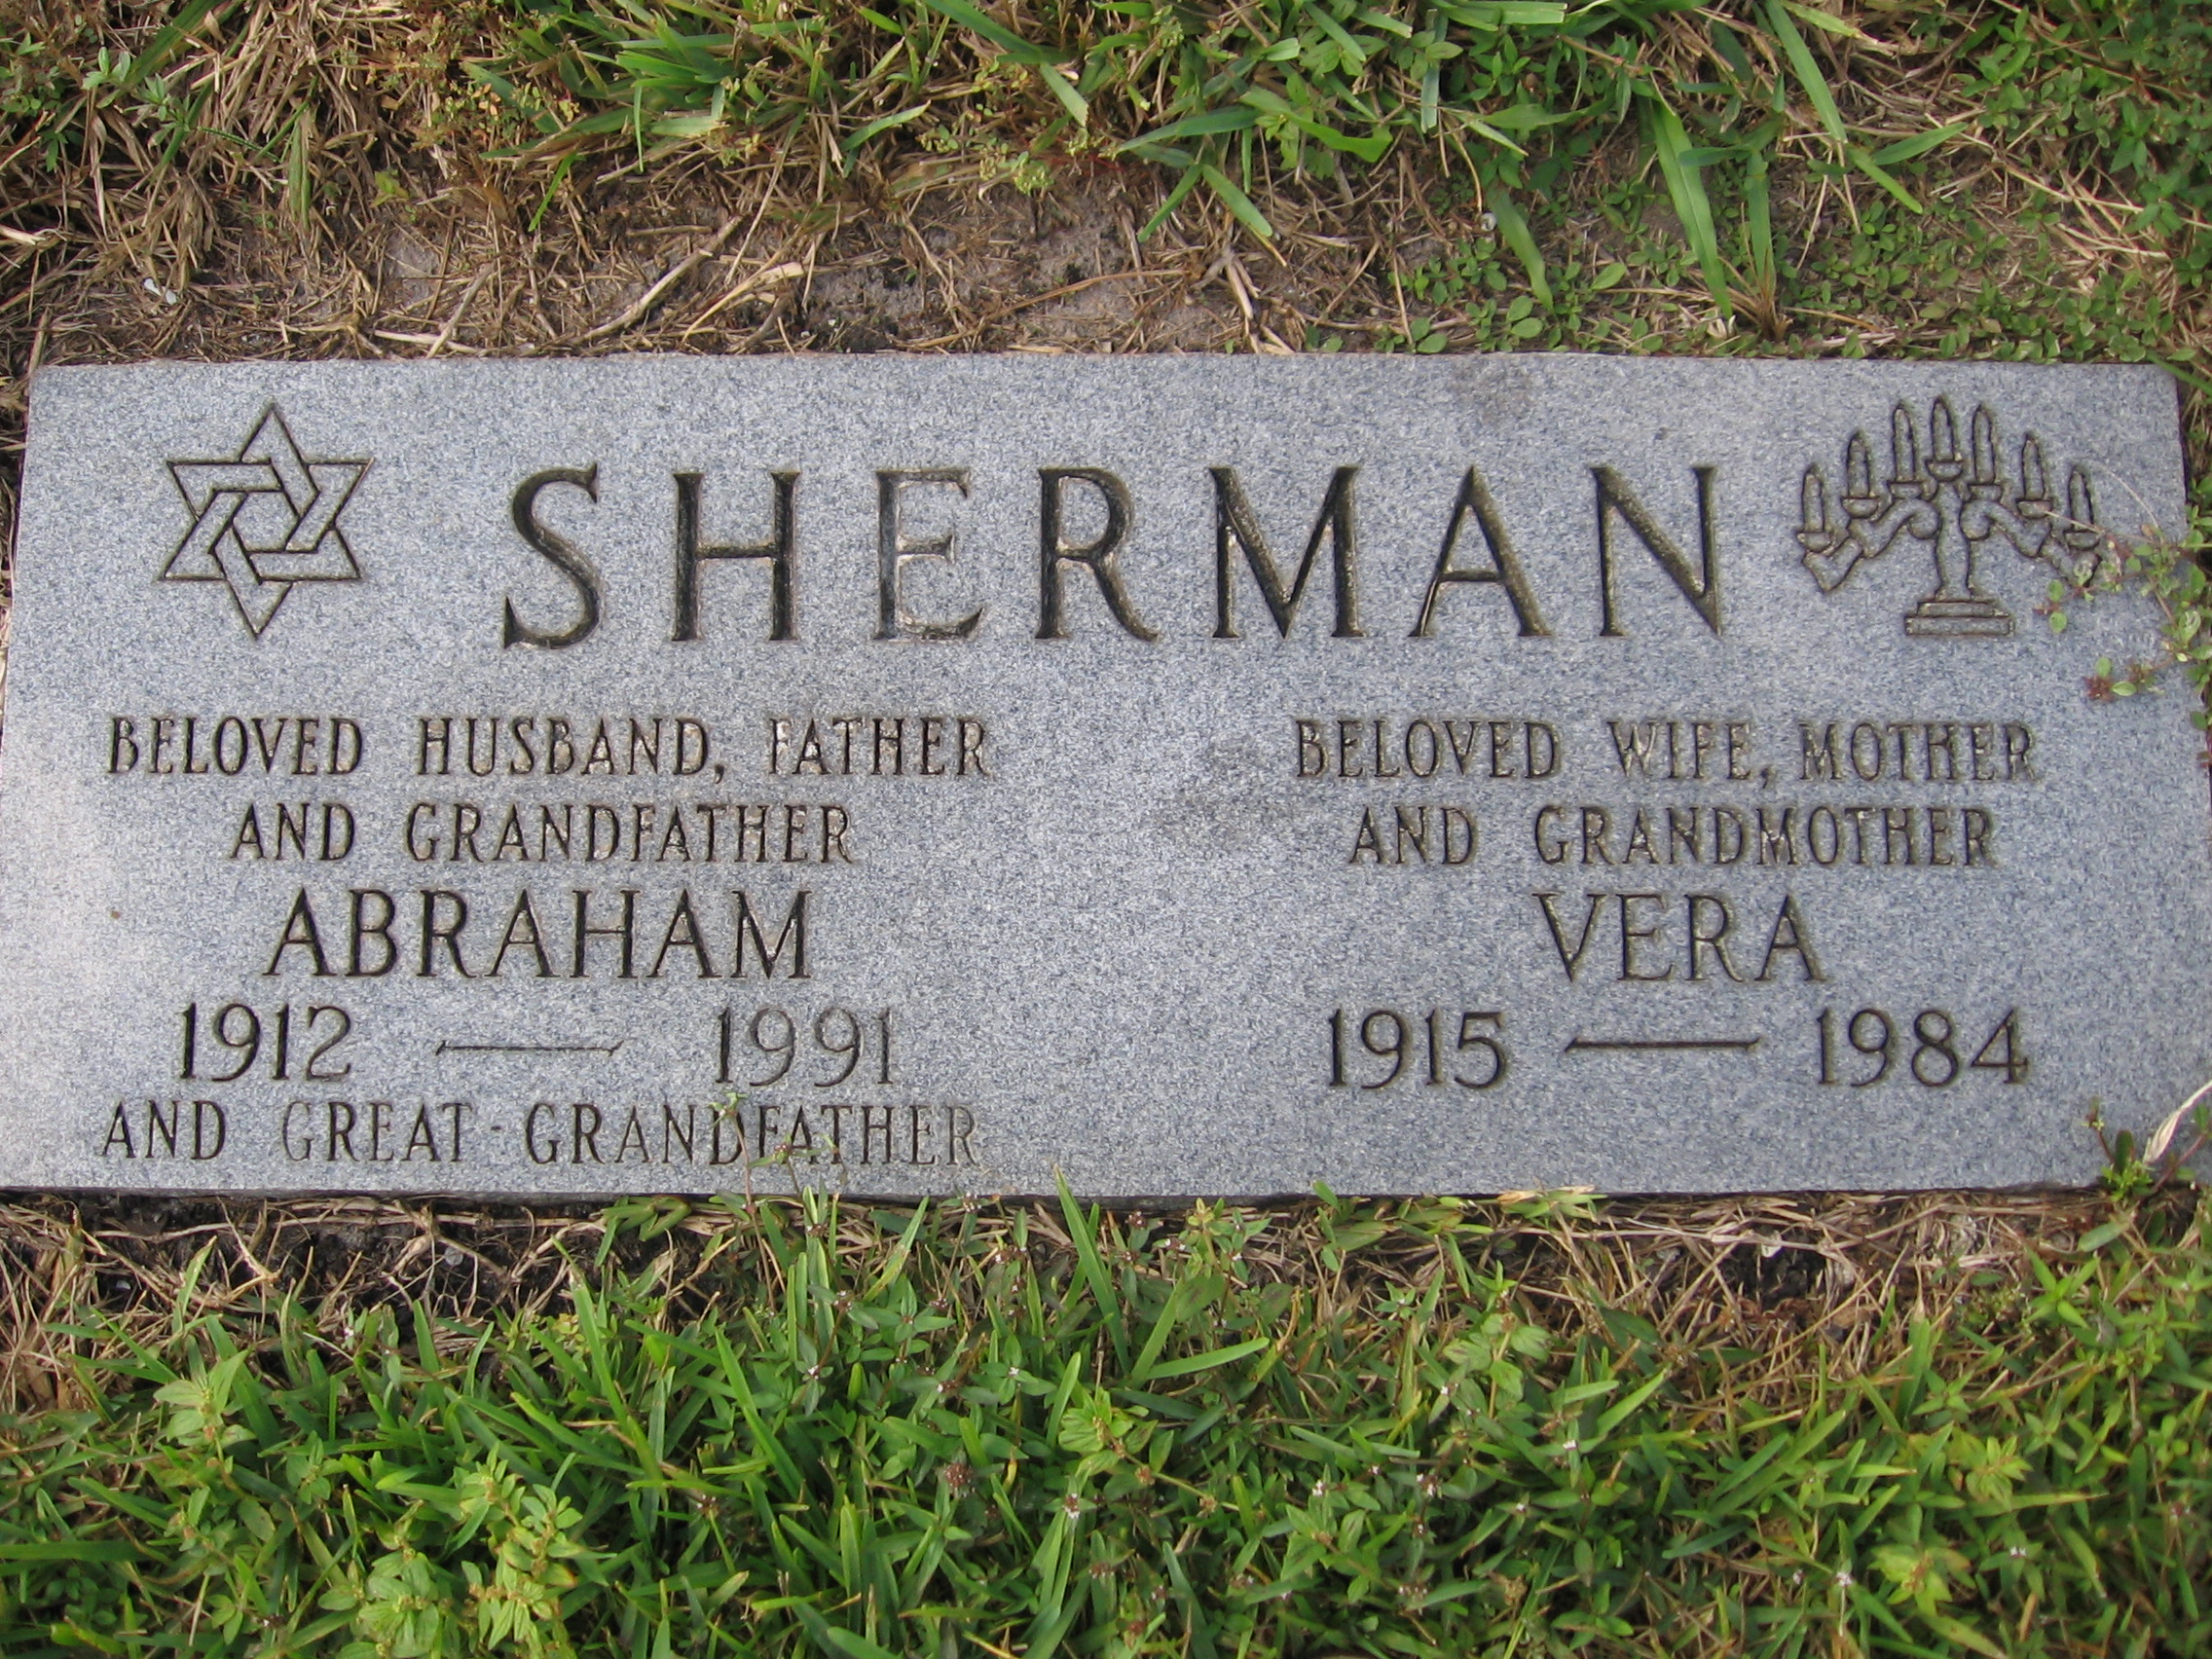 Abraham Sherman